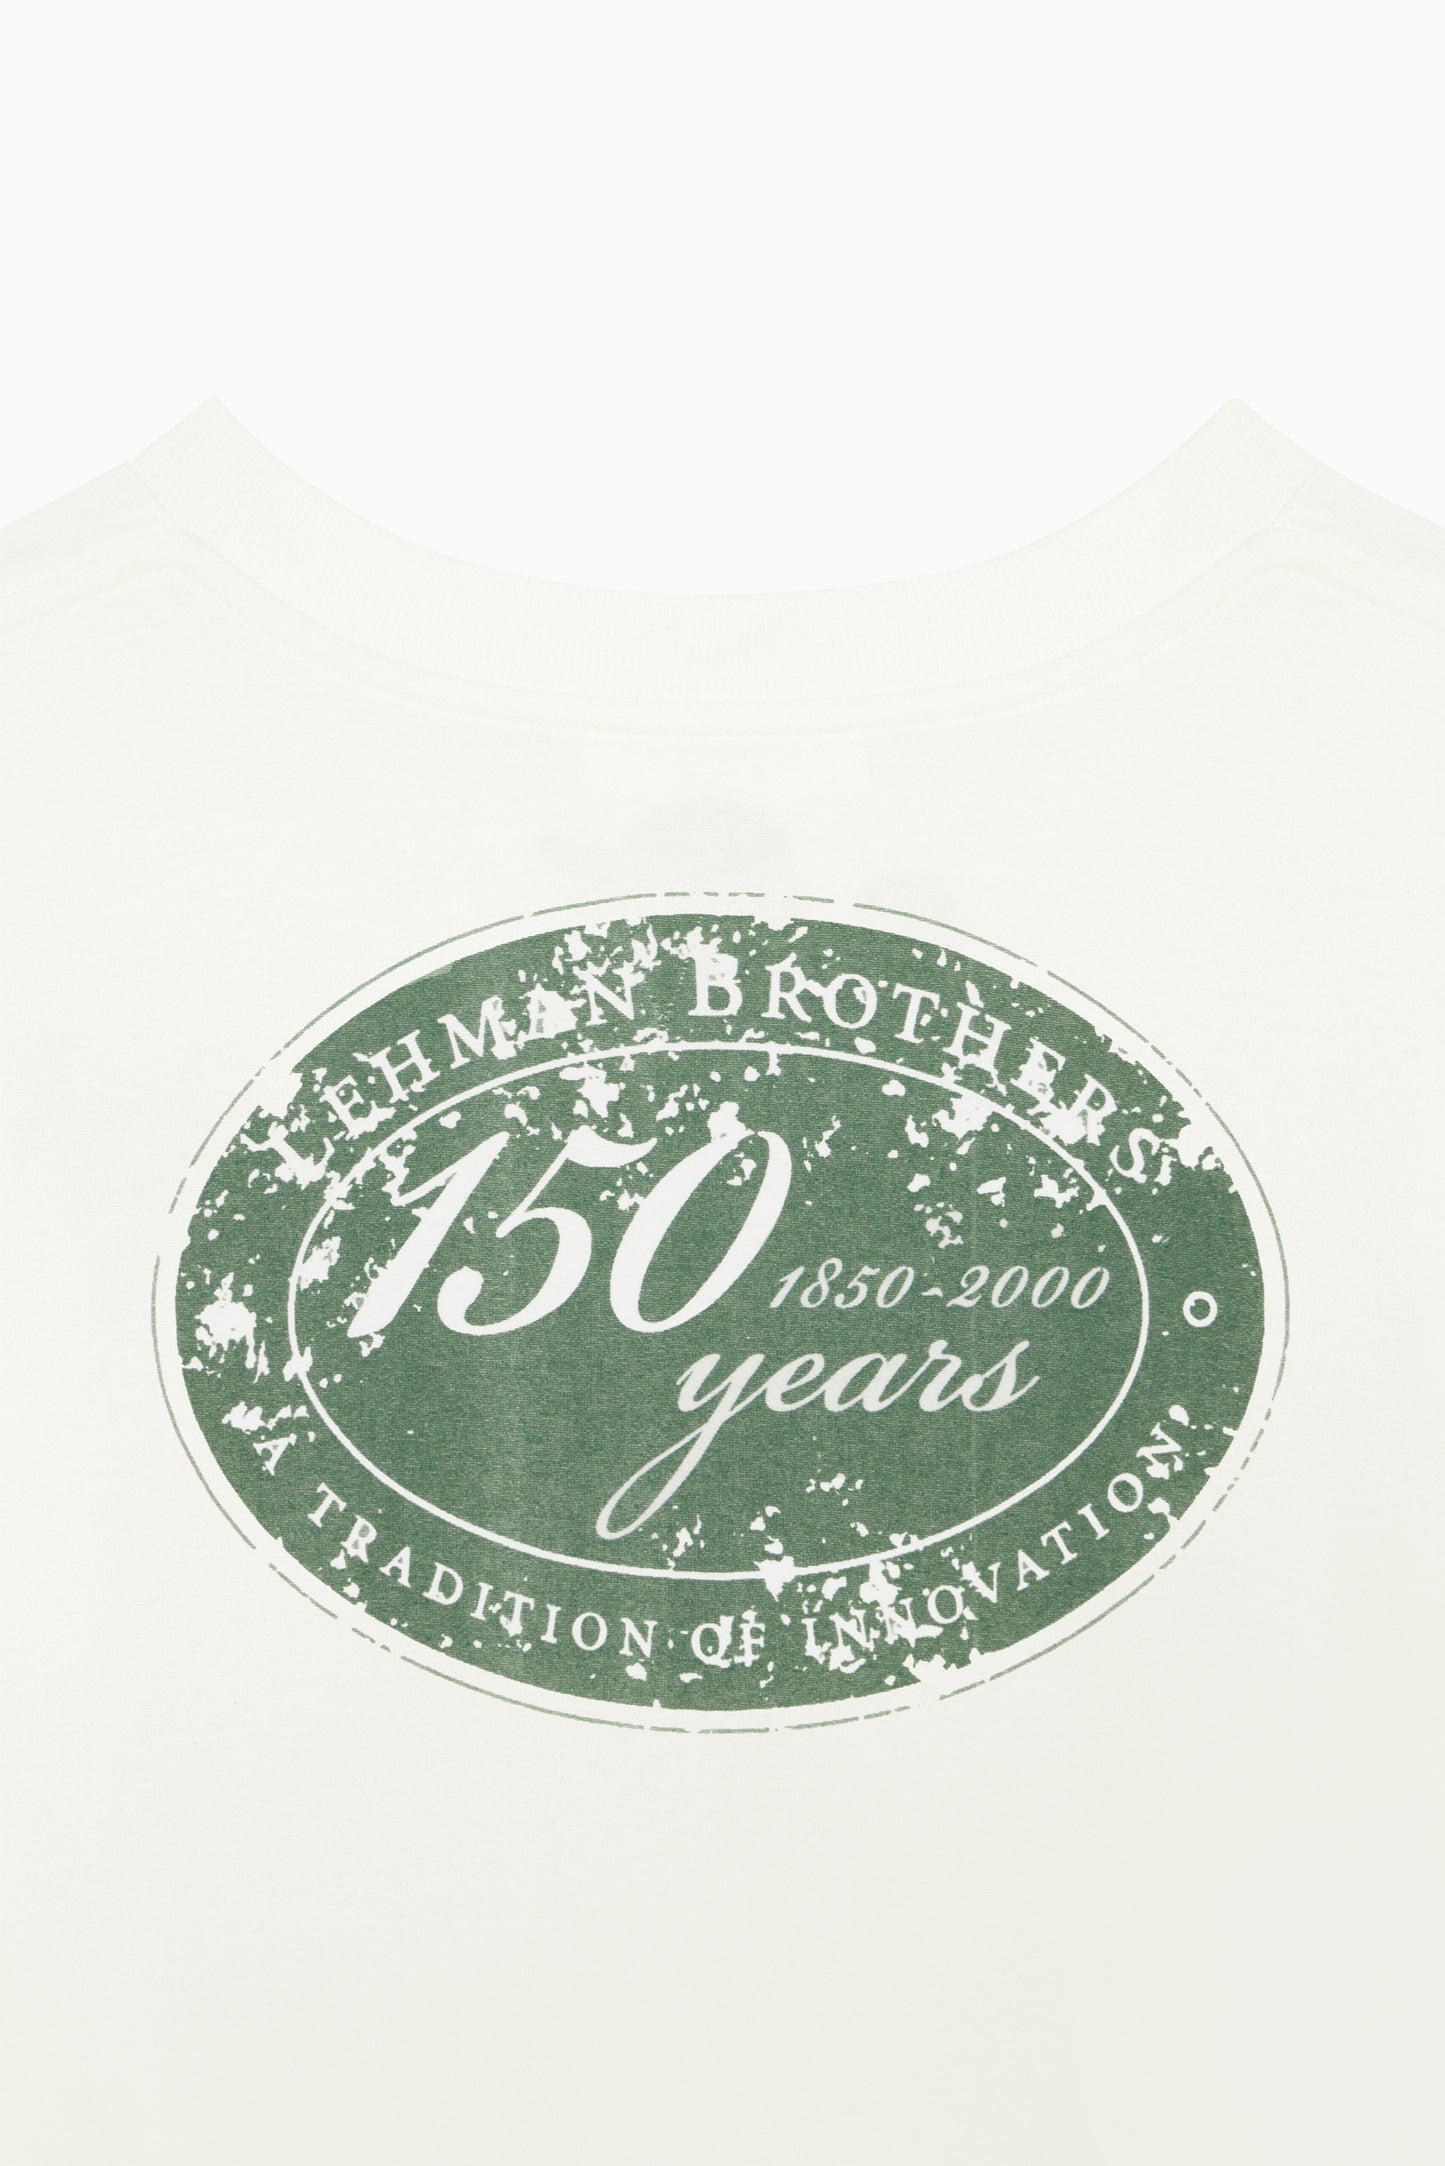 Man's Lehman Brothers T-Shirt